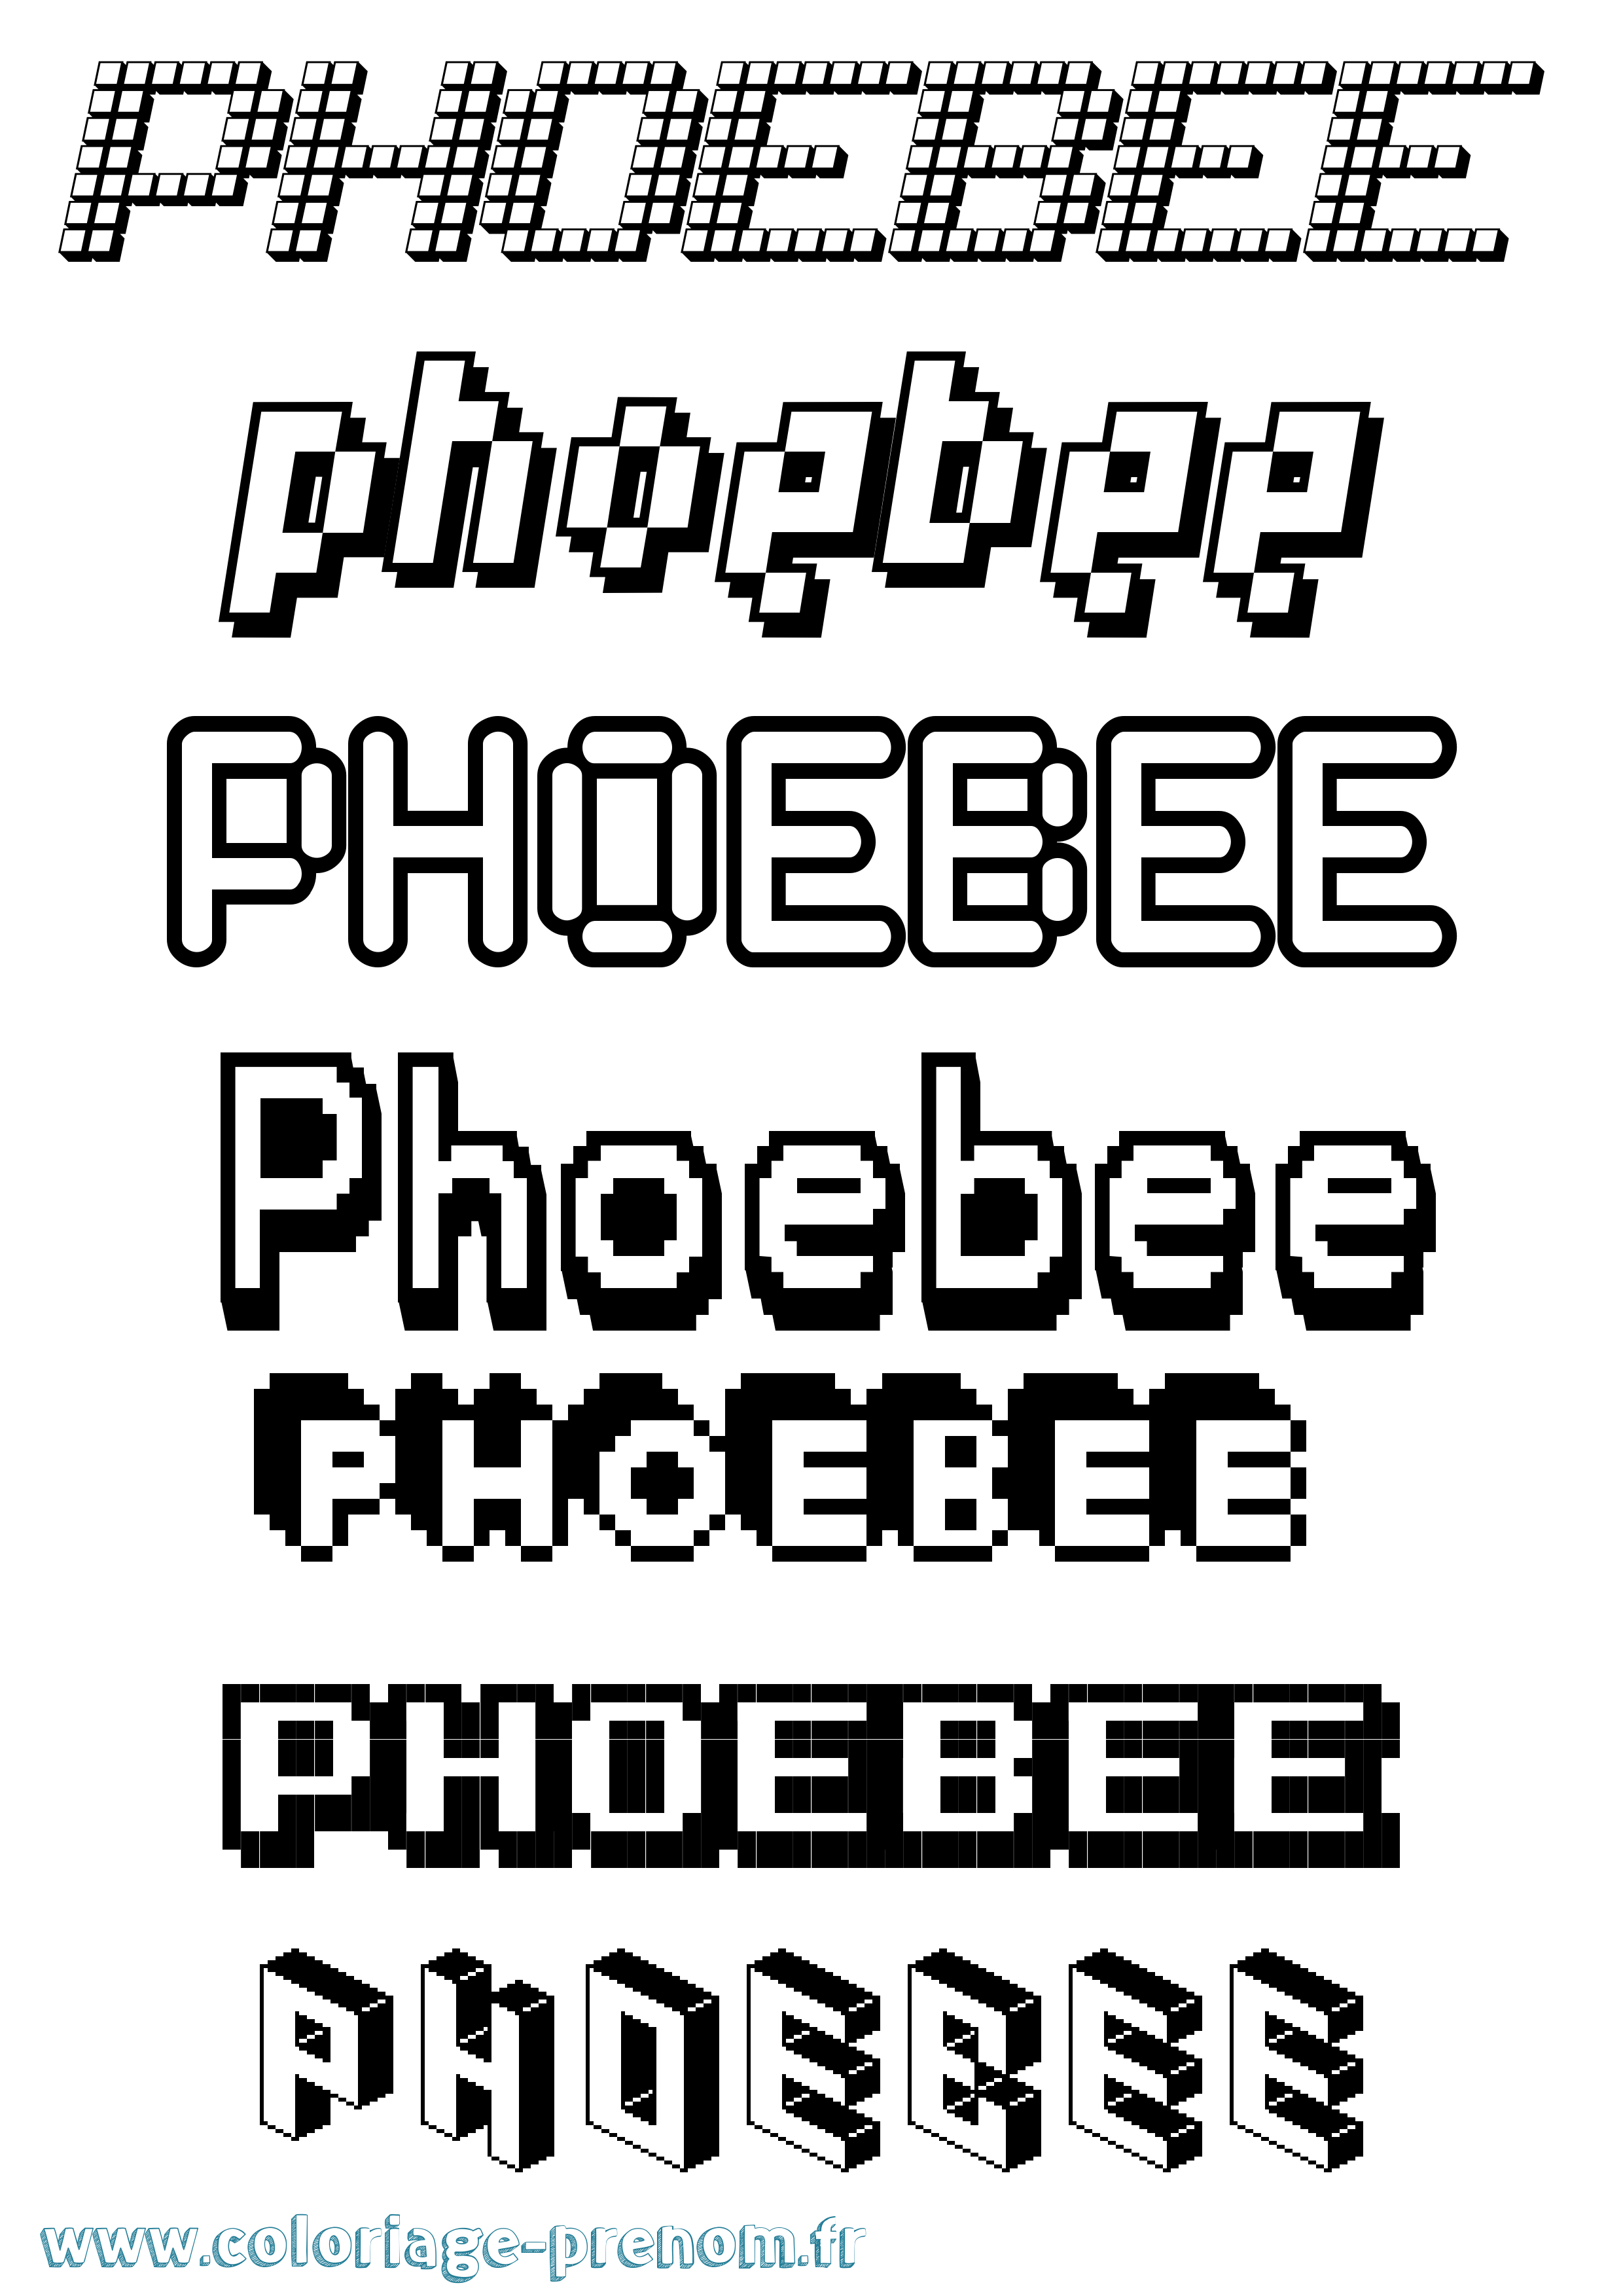 Coloriage prénom Phoebee Pixel